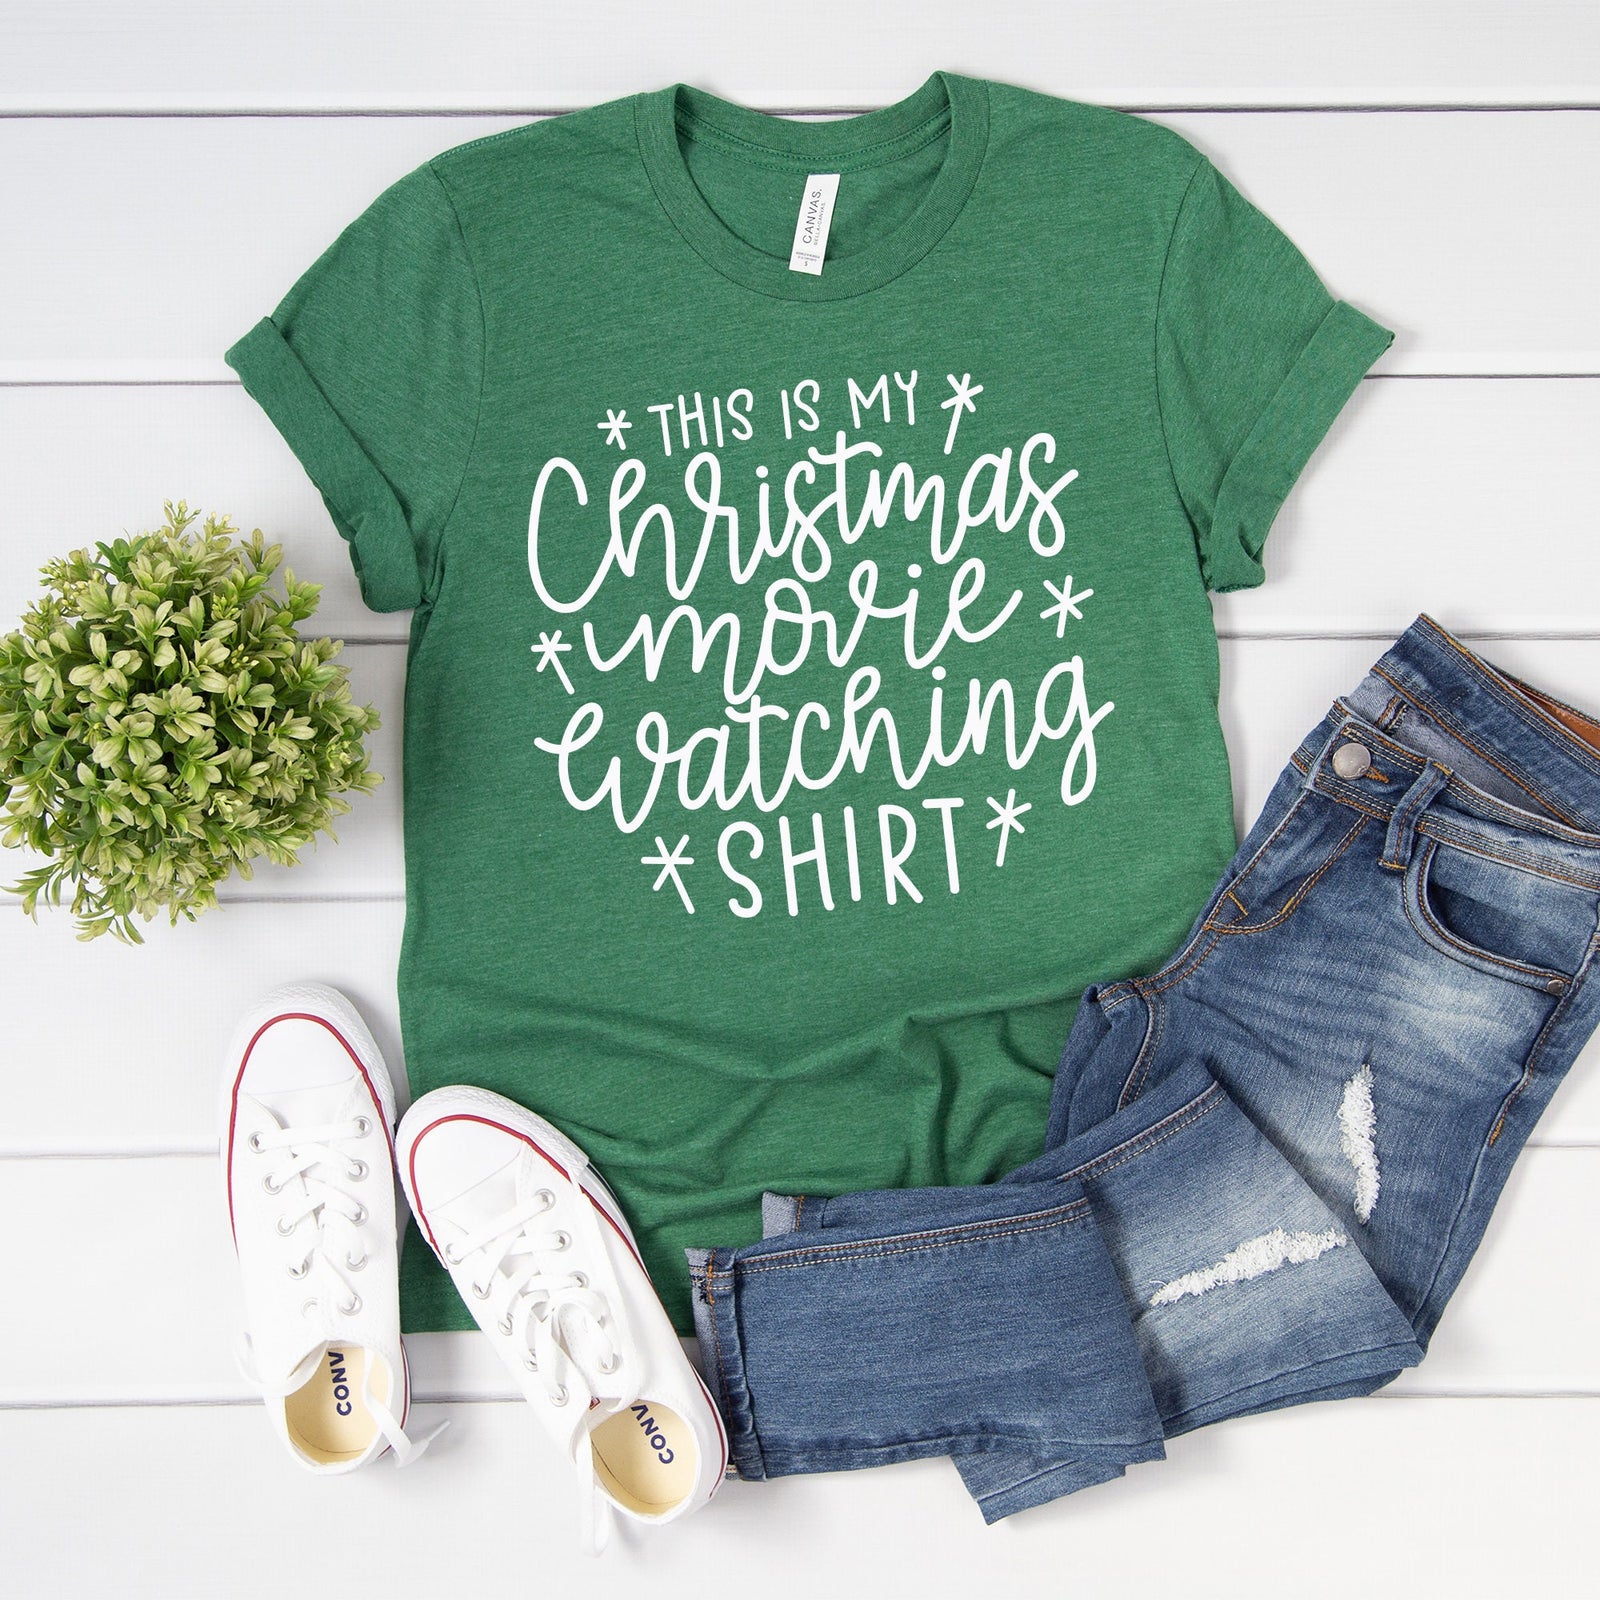 This is my Christmas Movie Watching Shirt - X-Mas T Shirt - Cute Christmas Shirt - Funny Holiday Shirt - Favorite Christmas T Shirt